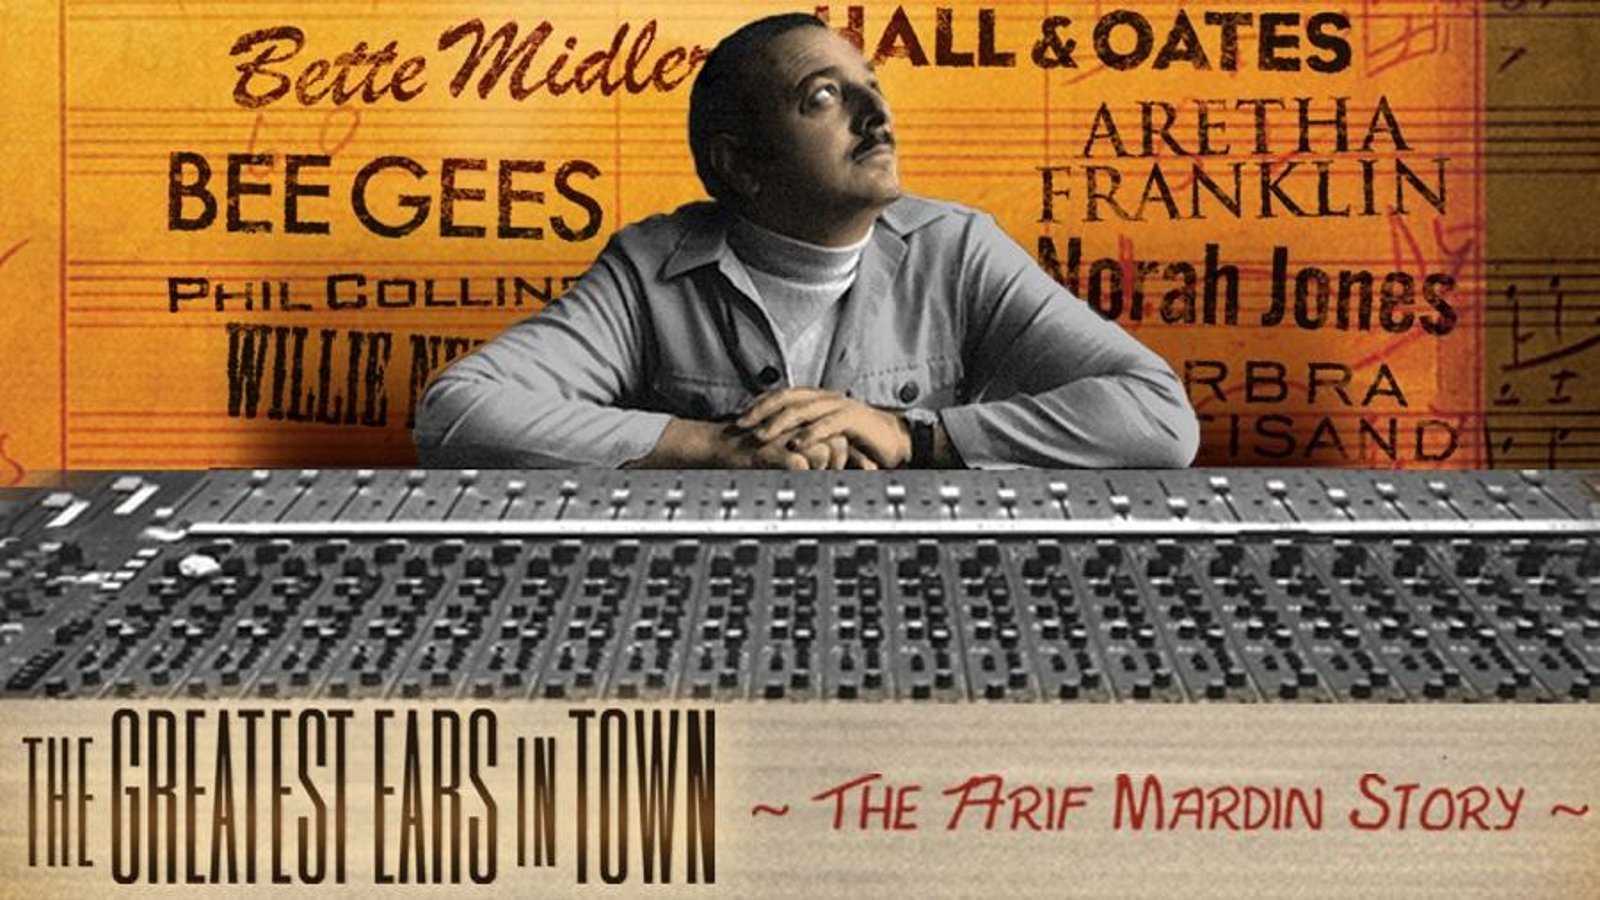 The Greatest Ears in Town - Grammy Award Winning Producer - Arif Mardin